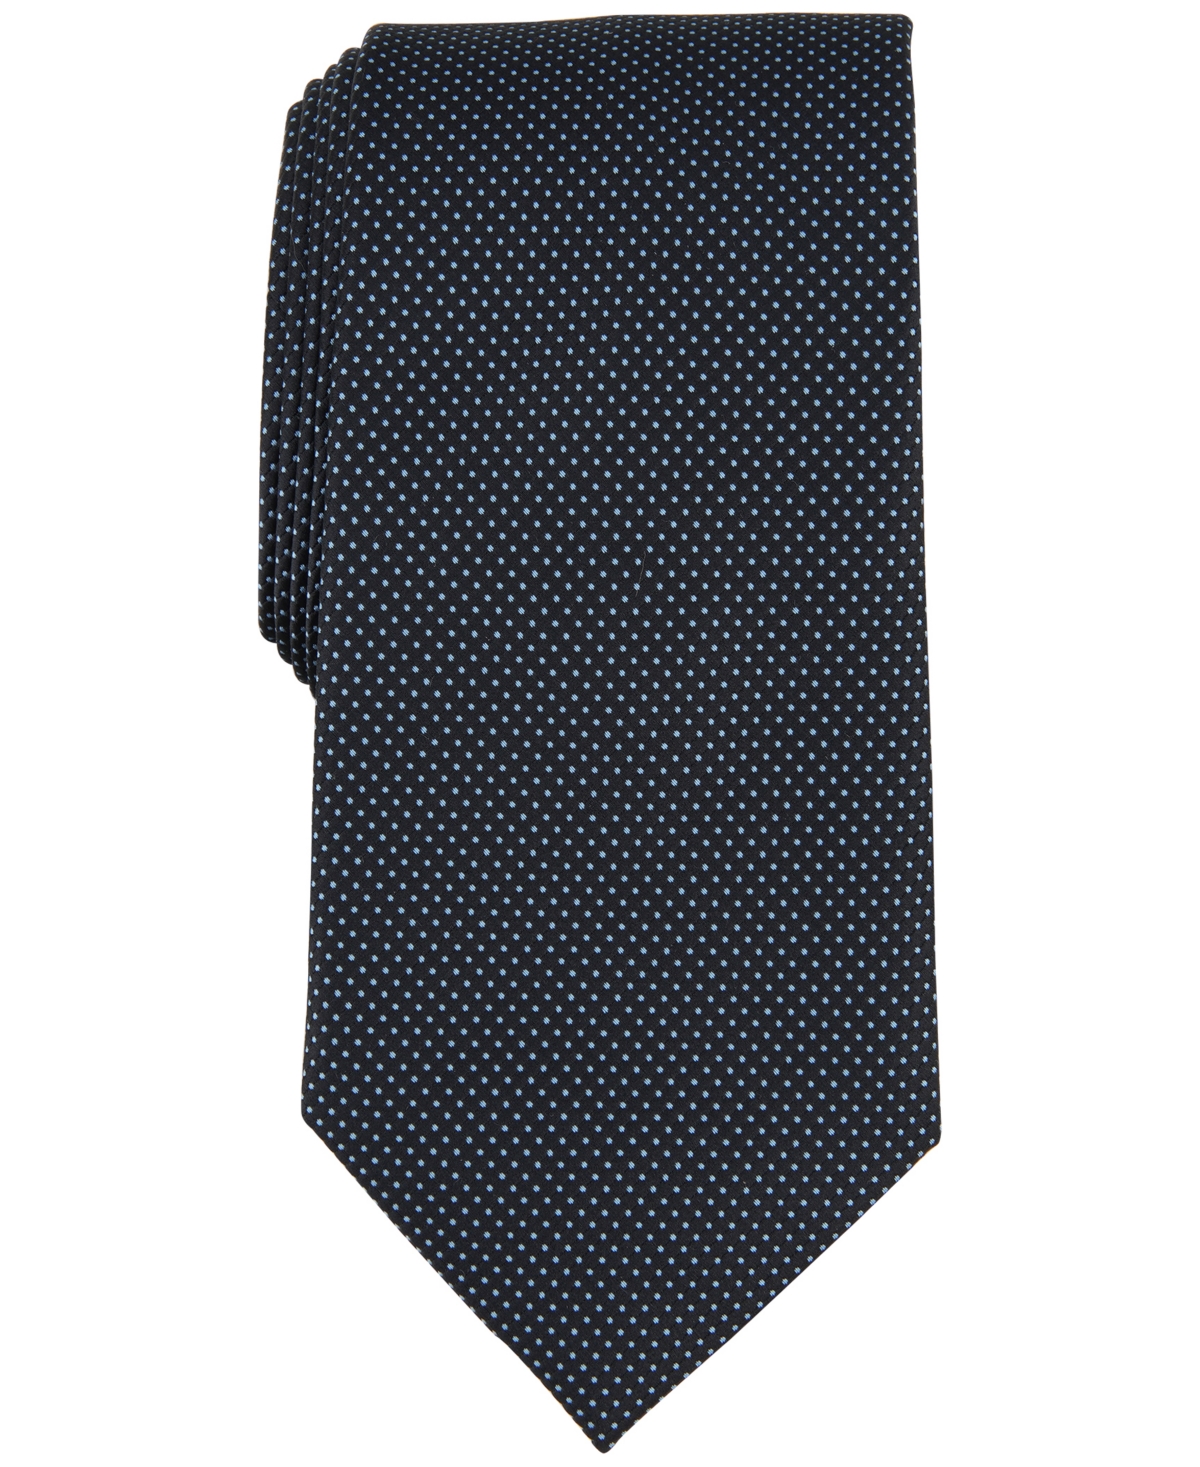 Men's Scott Micro-Dot Tie, Created for Macy's - Black